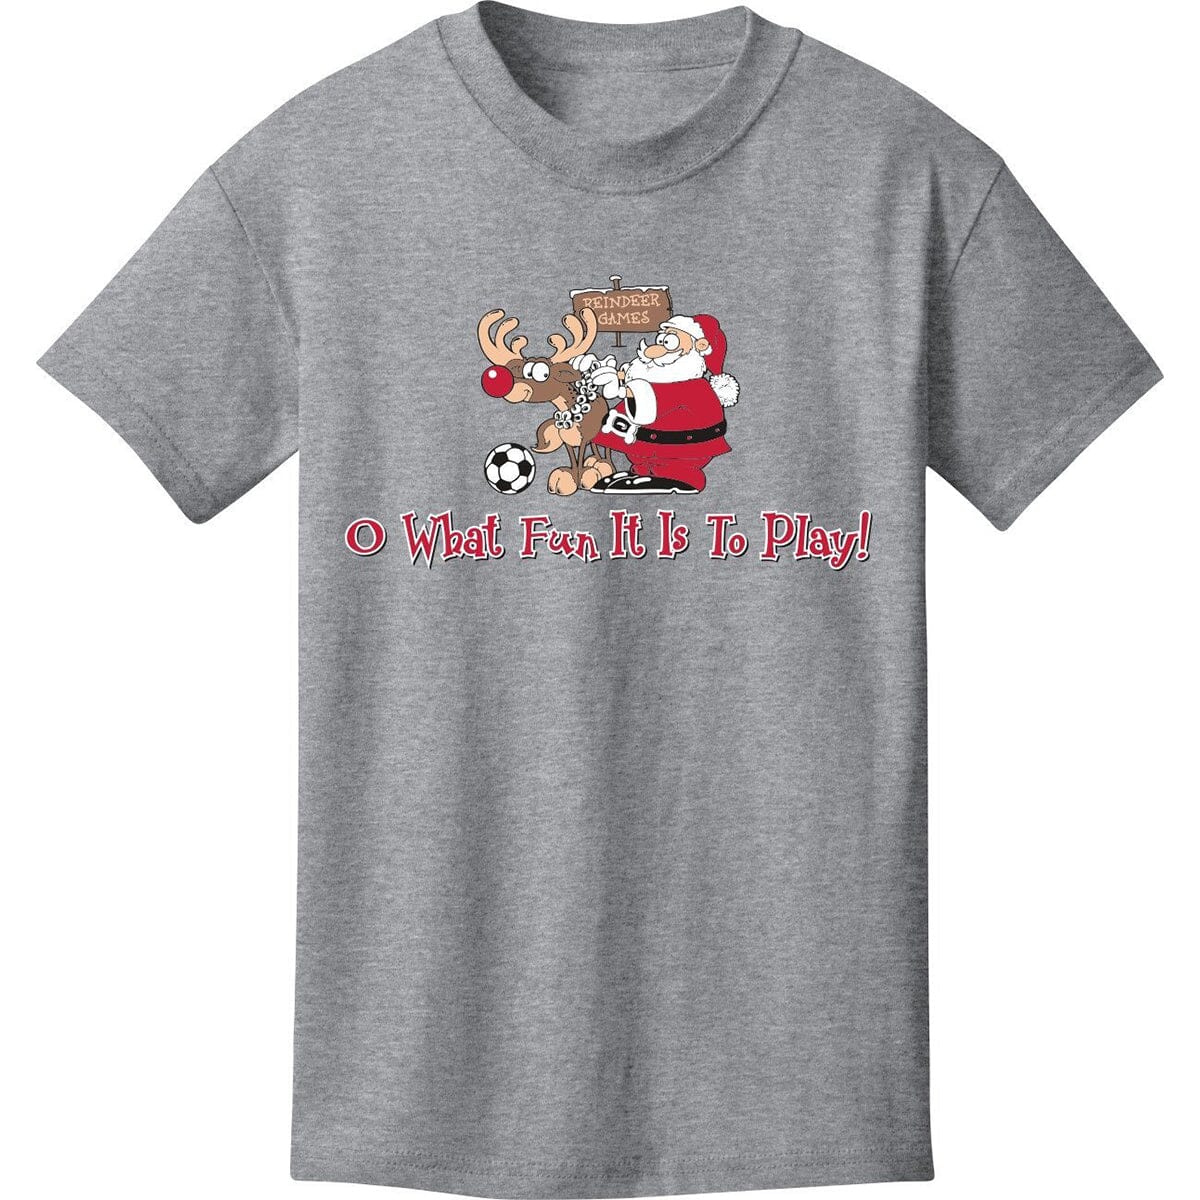 O What Fun Short Sleeve Soccer T-Shirt Humorous Shirt 411 Adult Small Grey 